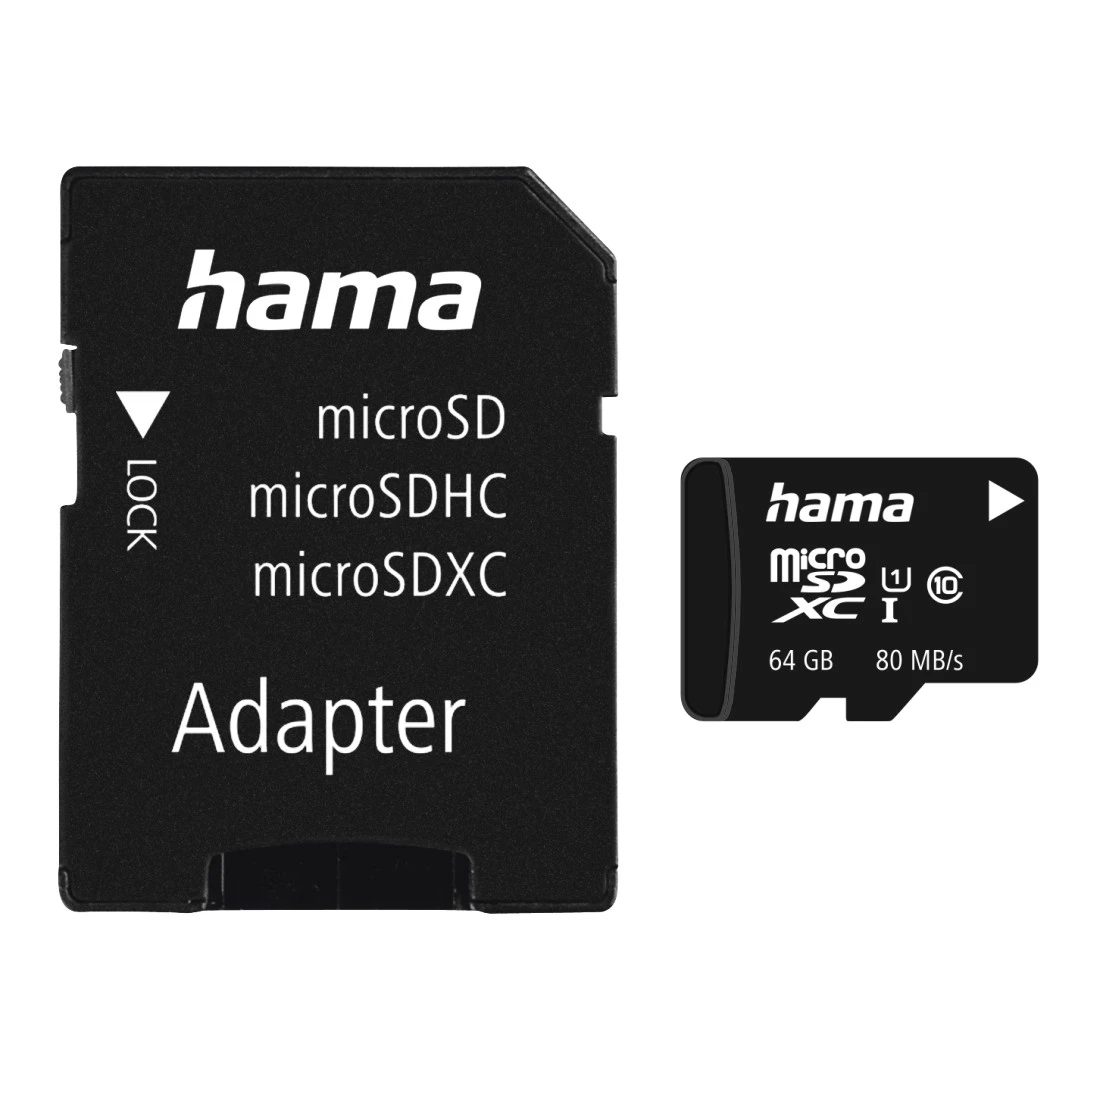 microSDXC 64GB Class 10 UHS-I 80MB/s + Adapter/Mobile | Hama